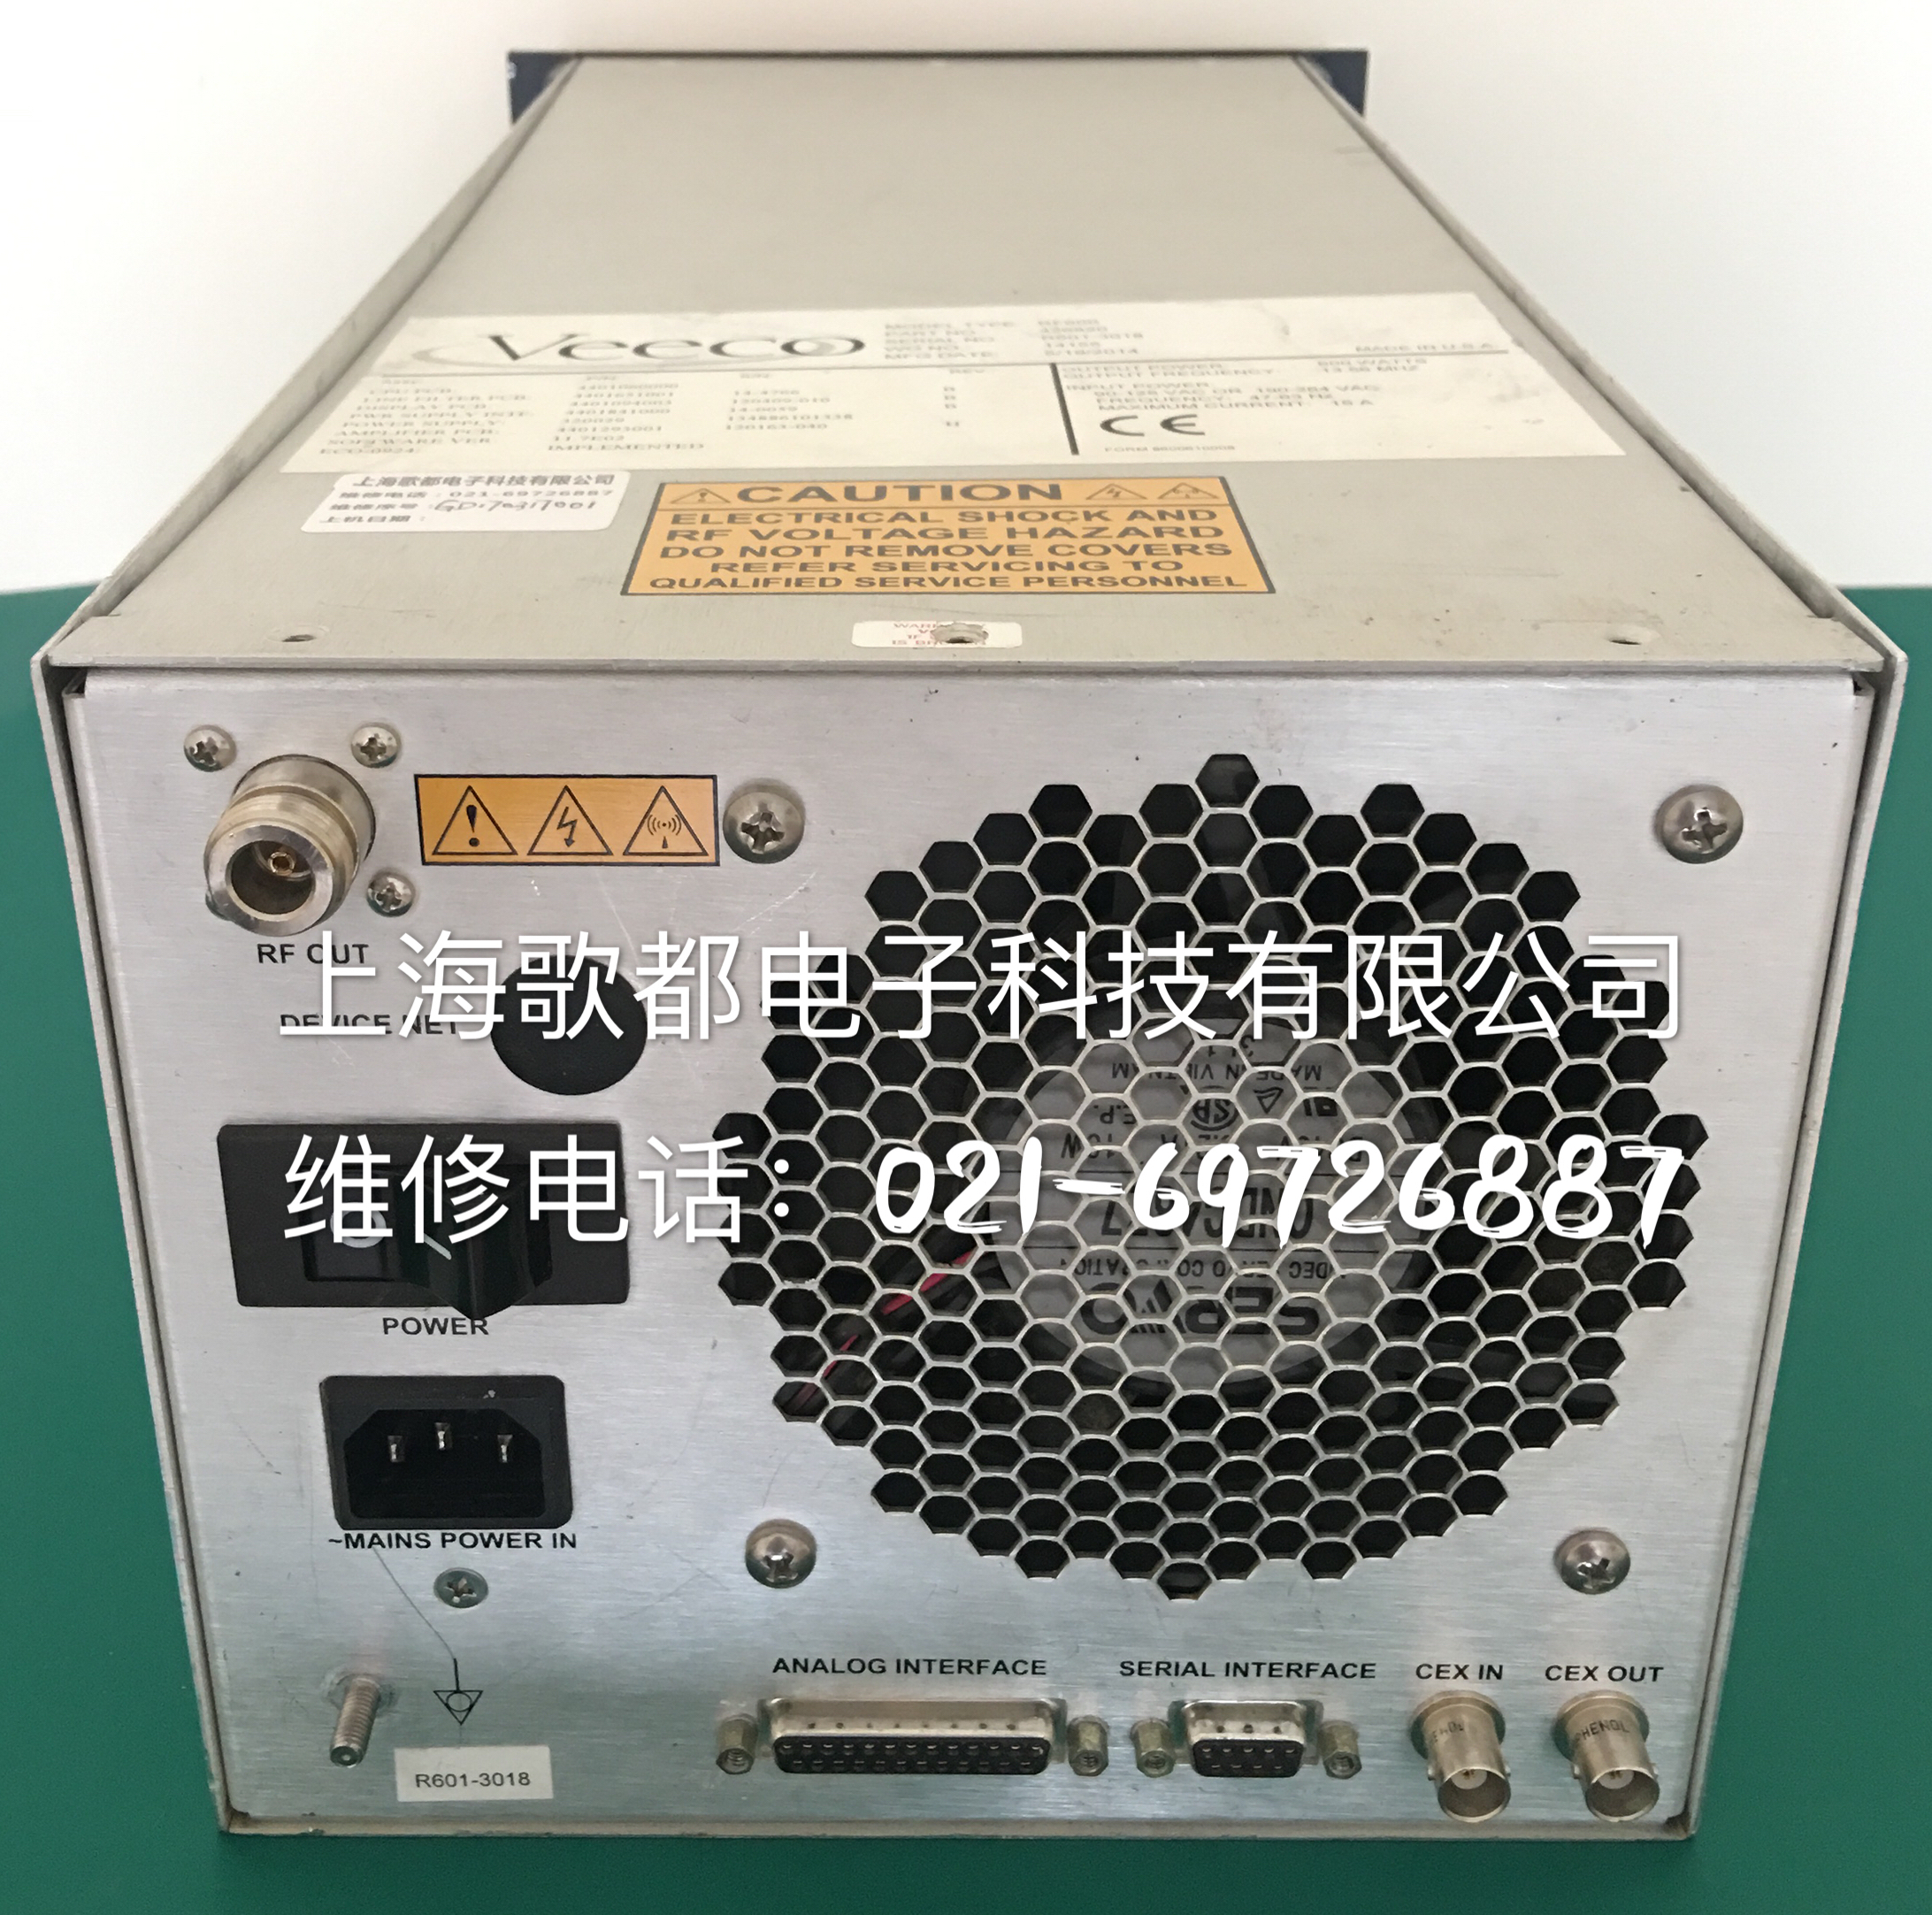 VEECO RF600 R601-3018，13.56MHZ(600W)射频电源专业维修